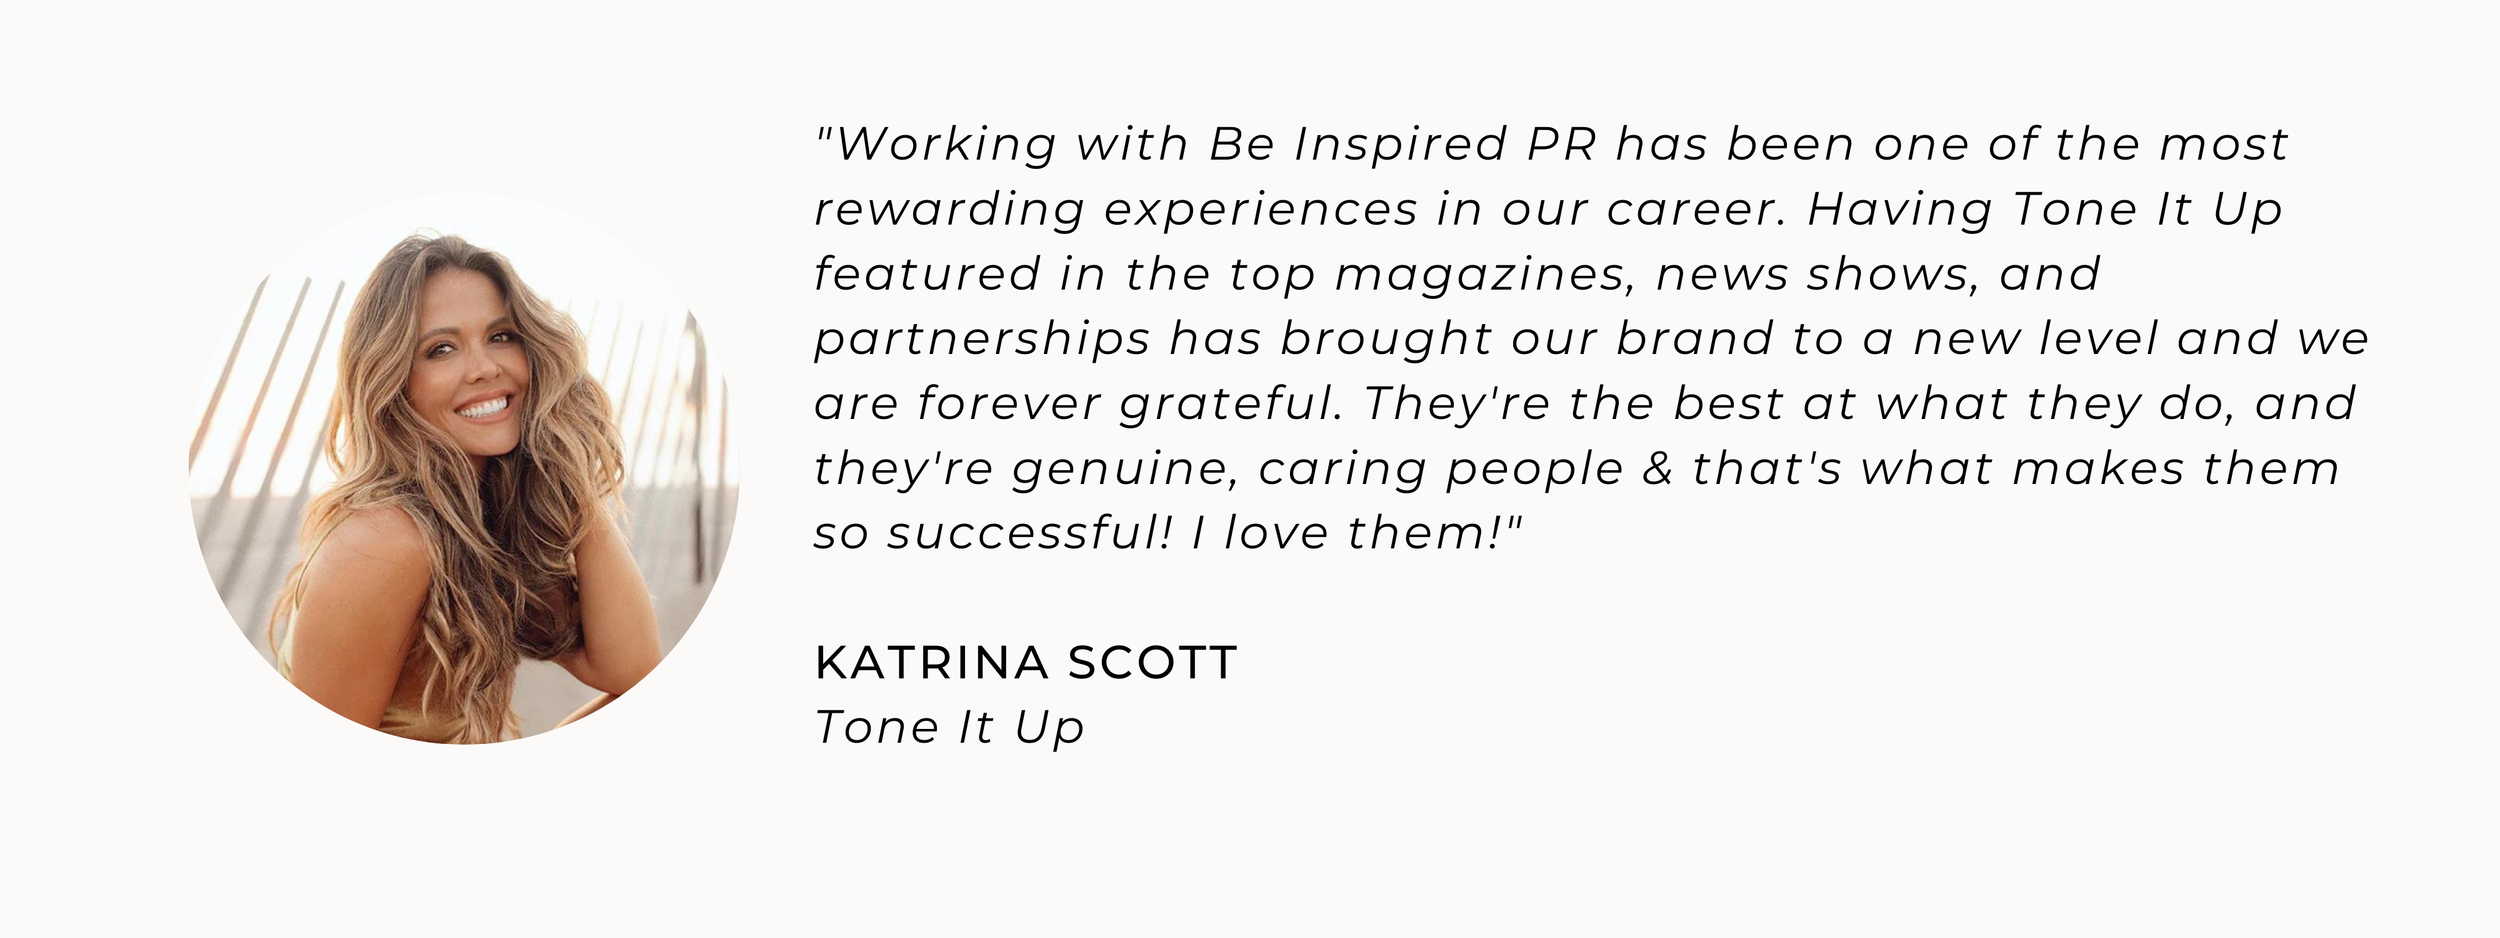 Katrina Scott Tone it Up Be Inspired PR